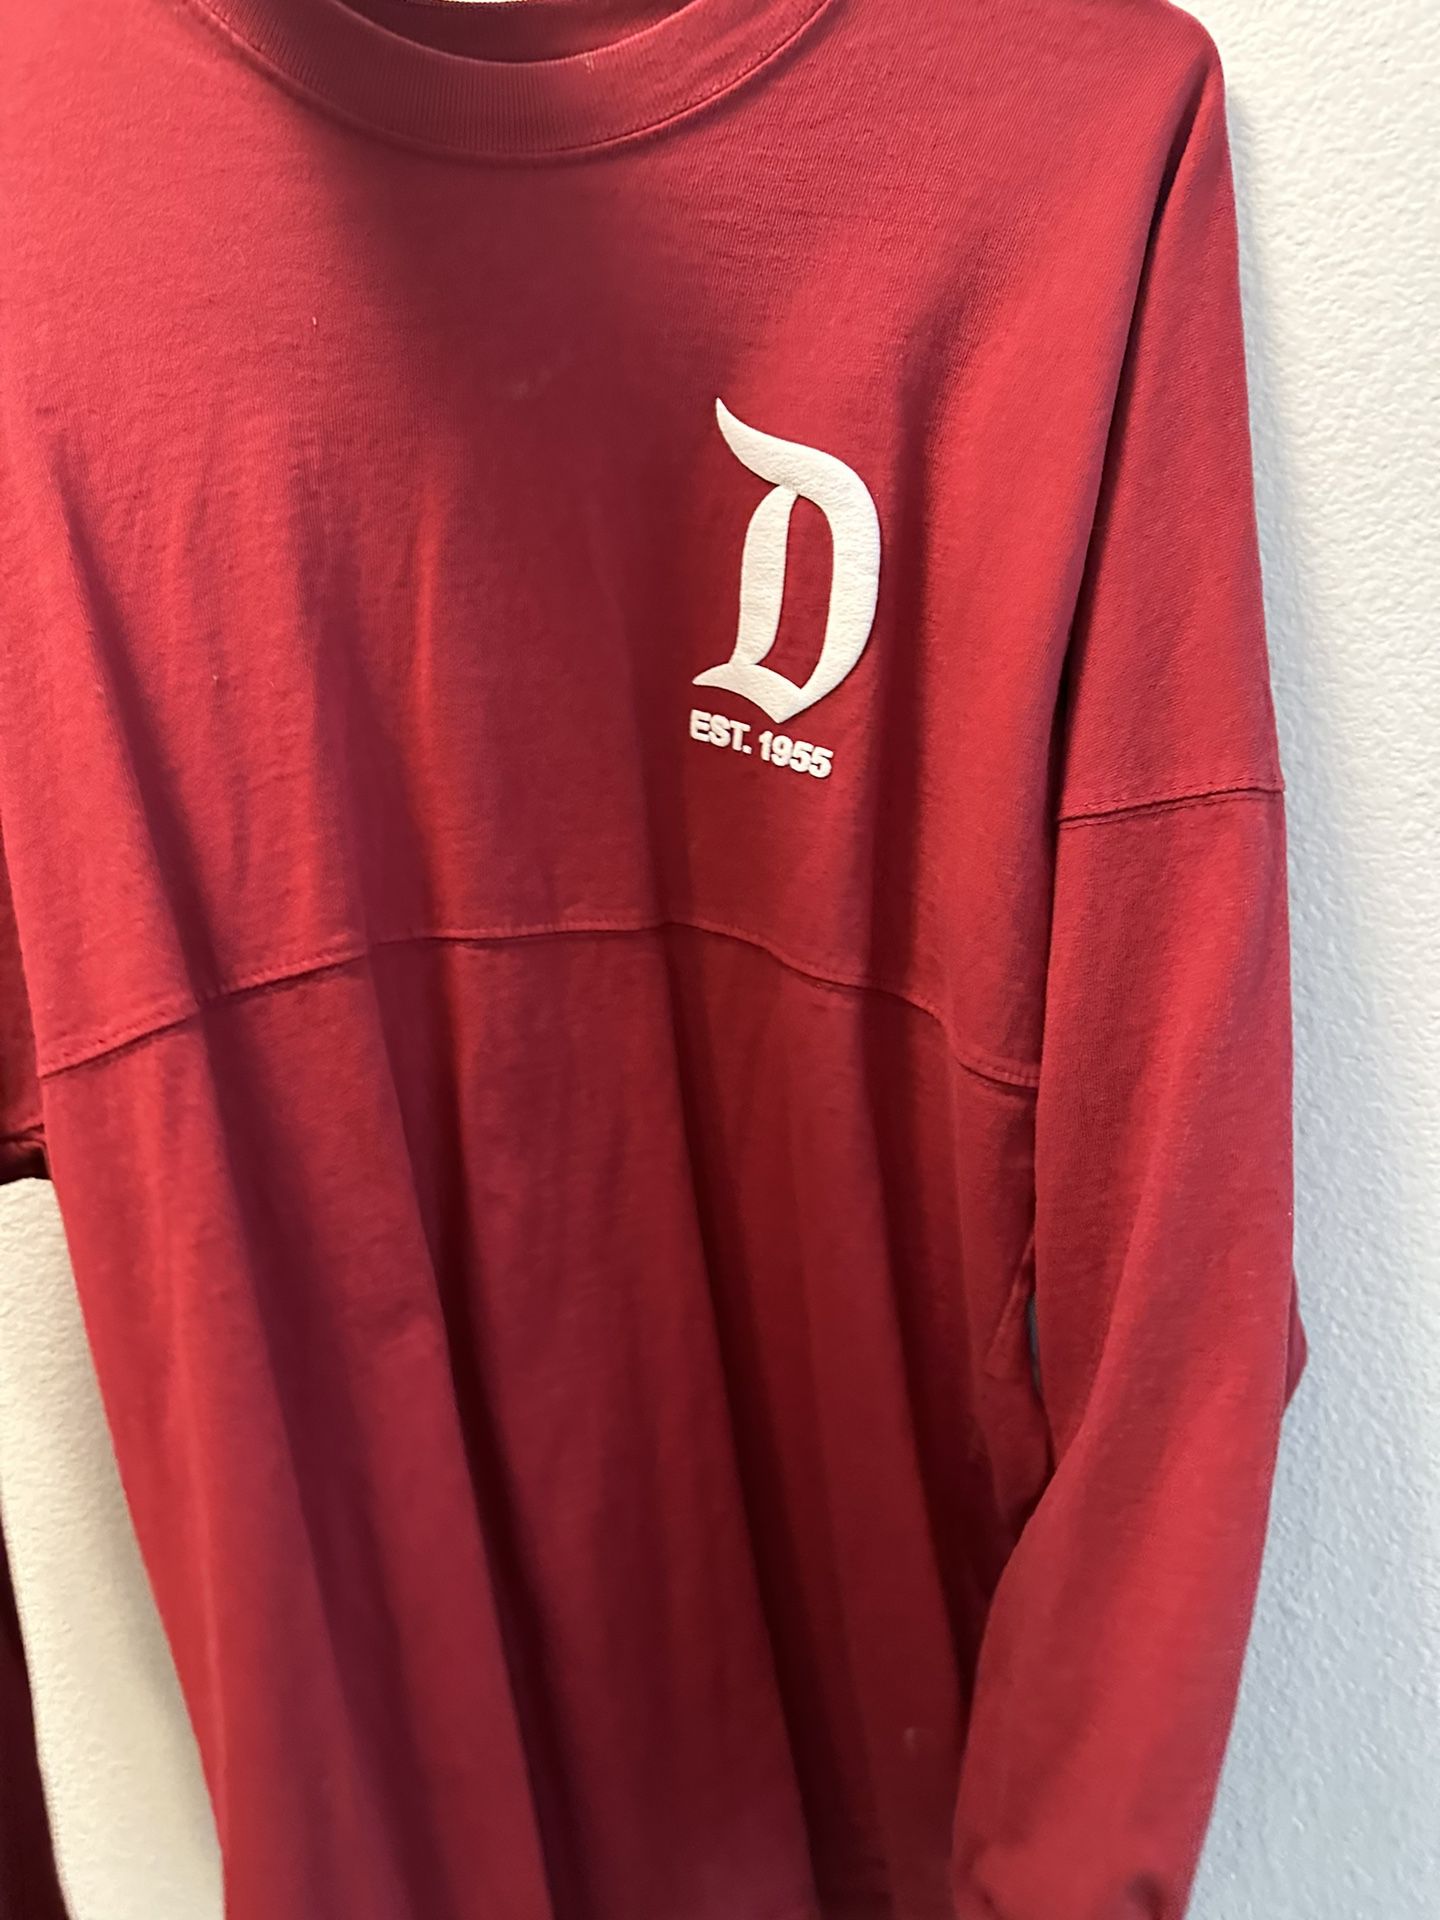 disney jersey